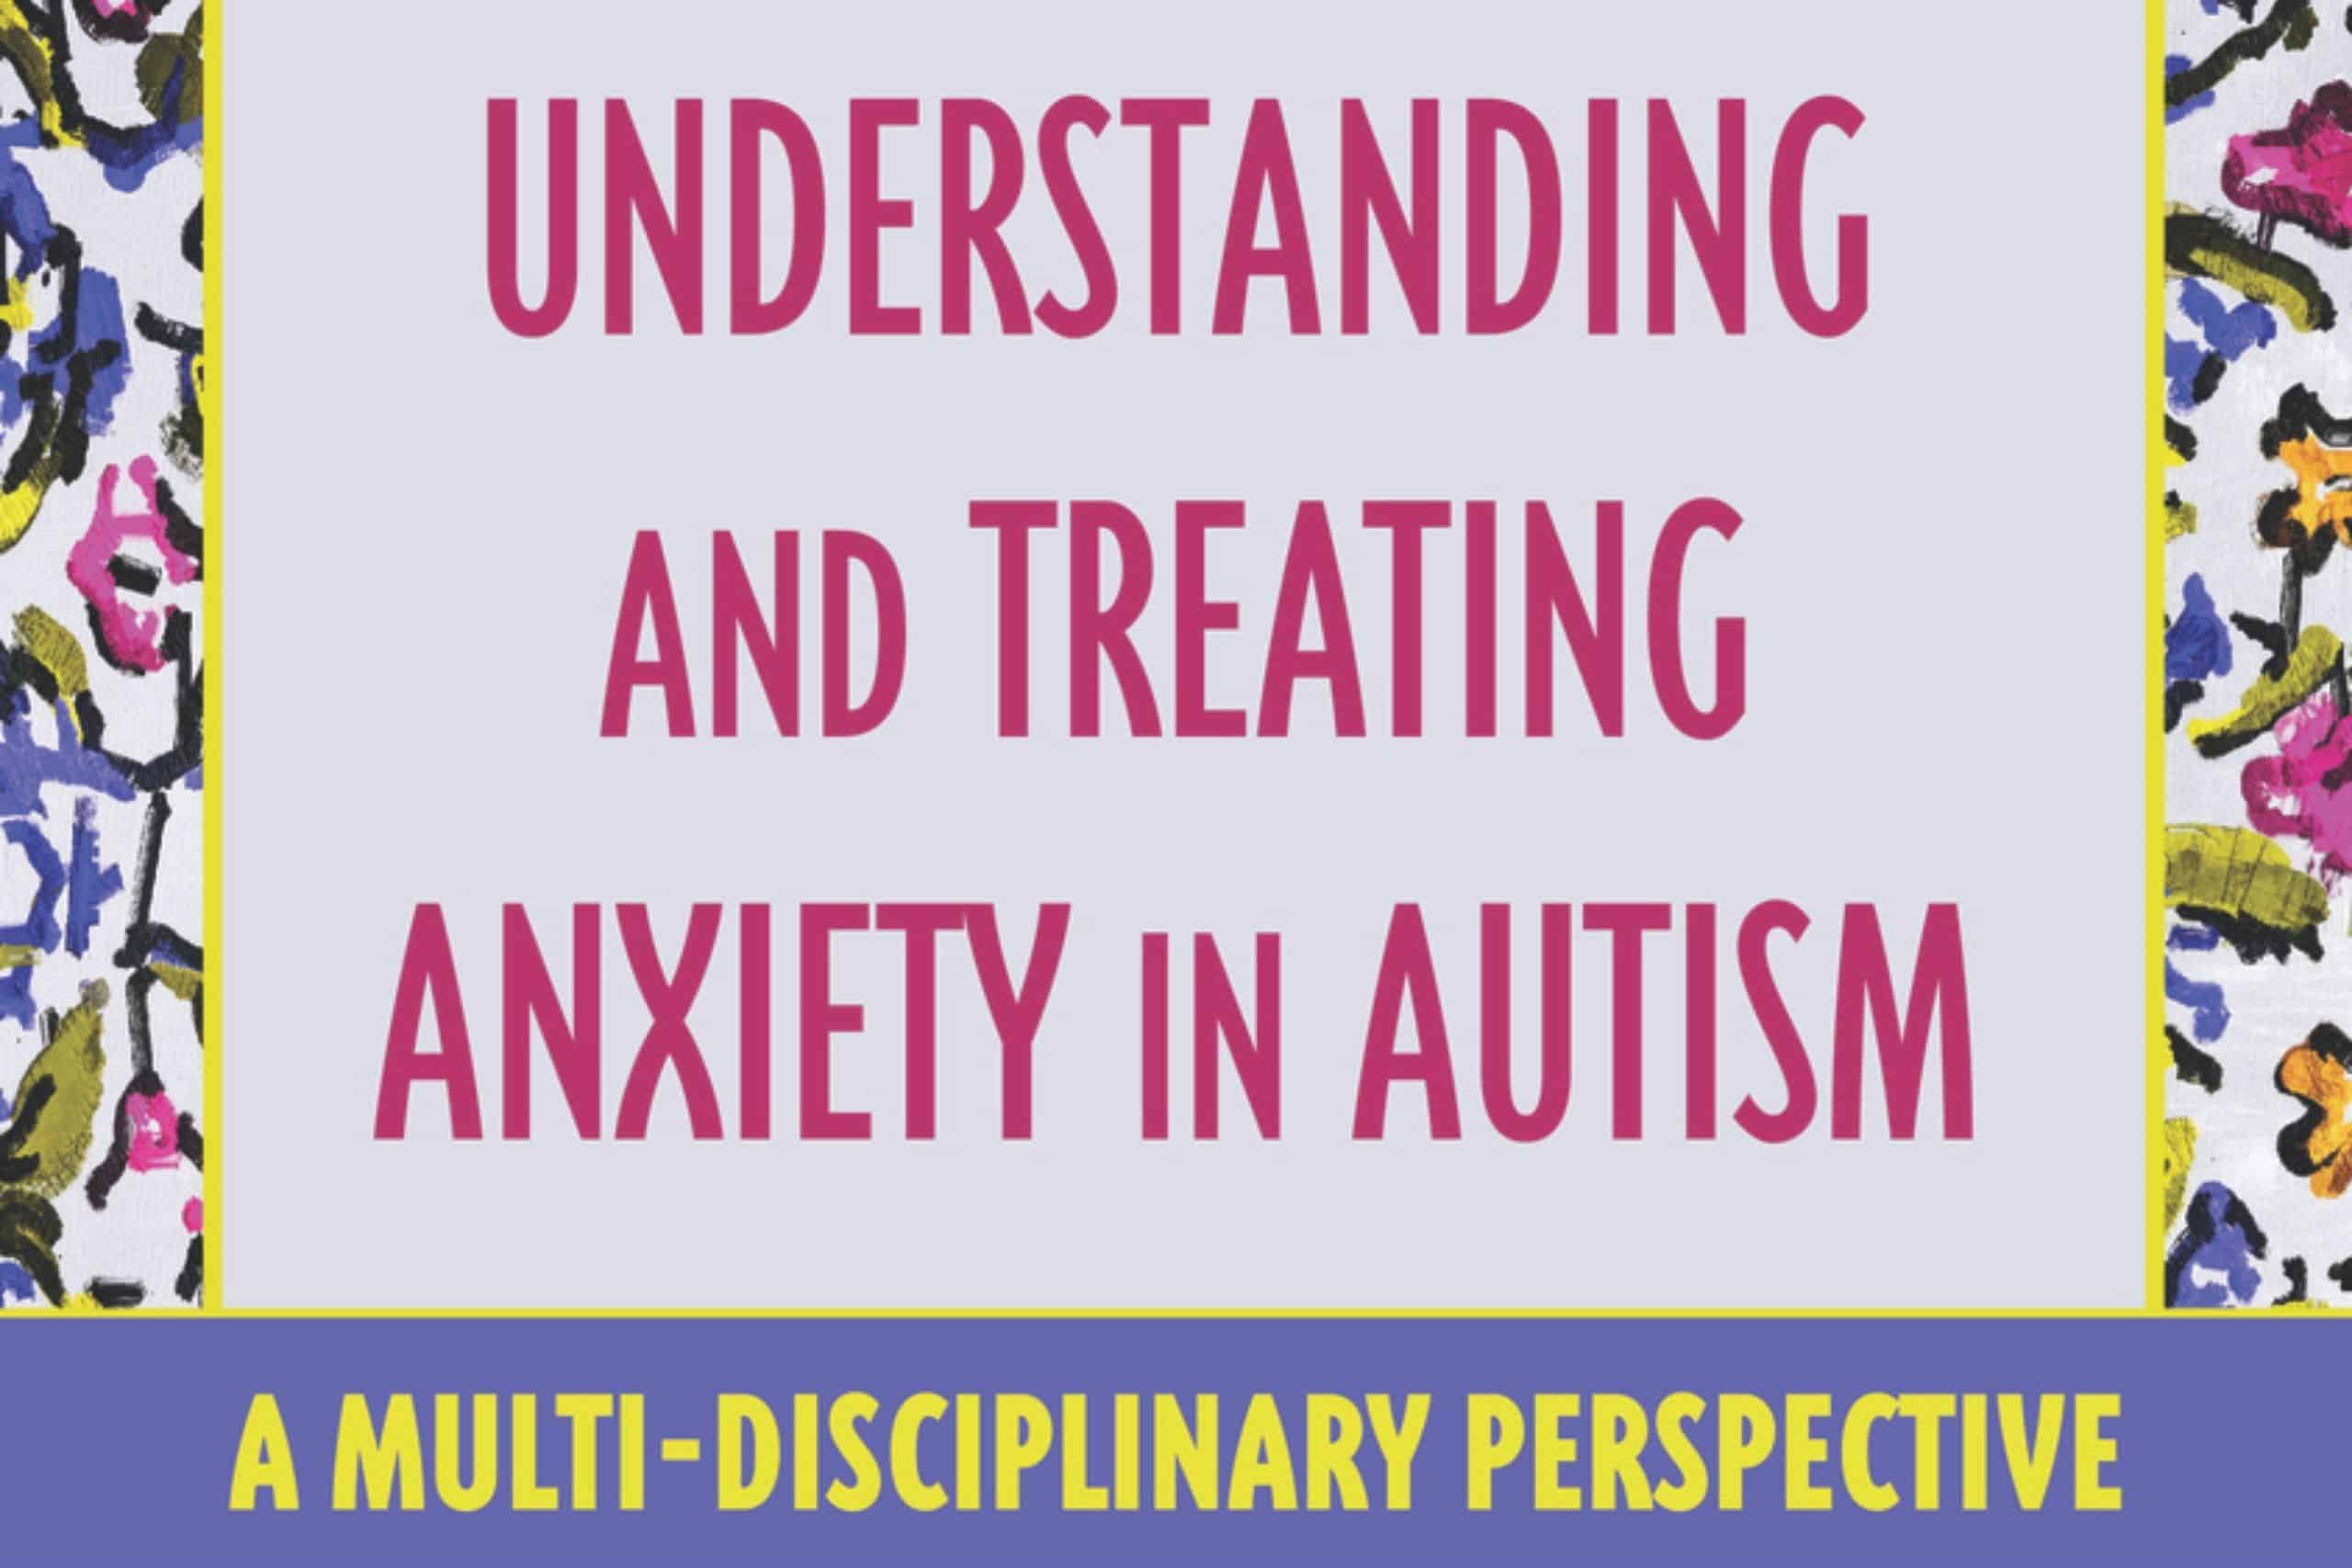 anxiety autism